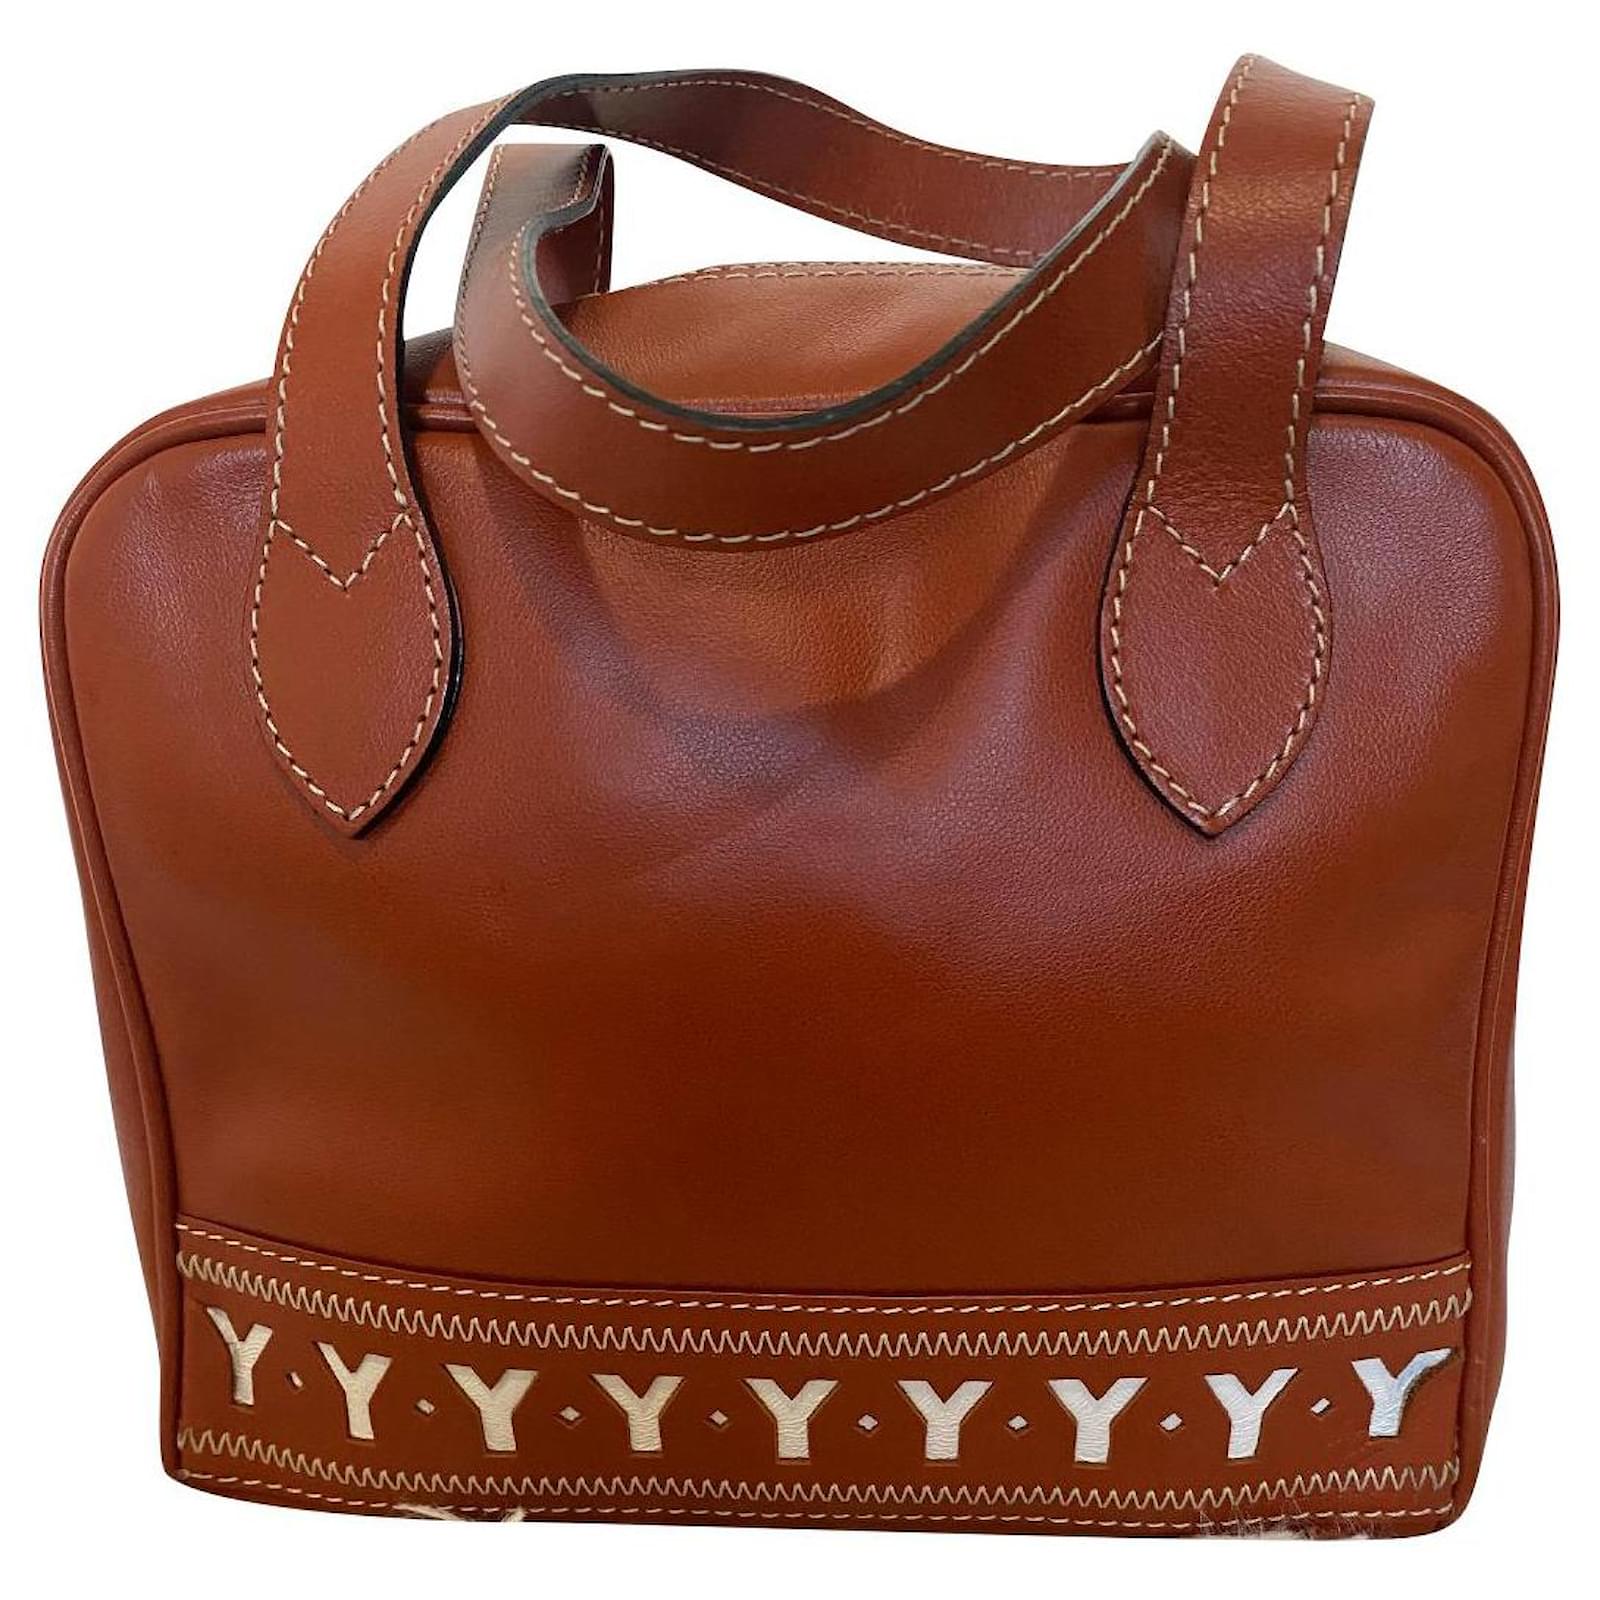 Yves Saint Laurent YSL Icare Black Lambskin Leather Maxi Shopping Tote Bag  Purse | eBay